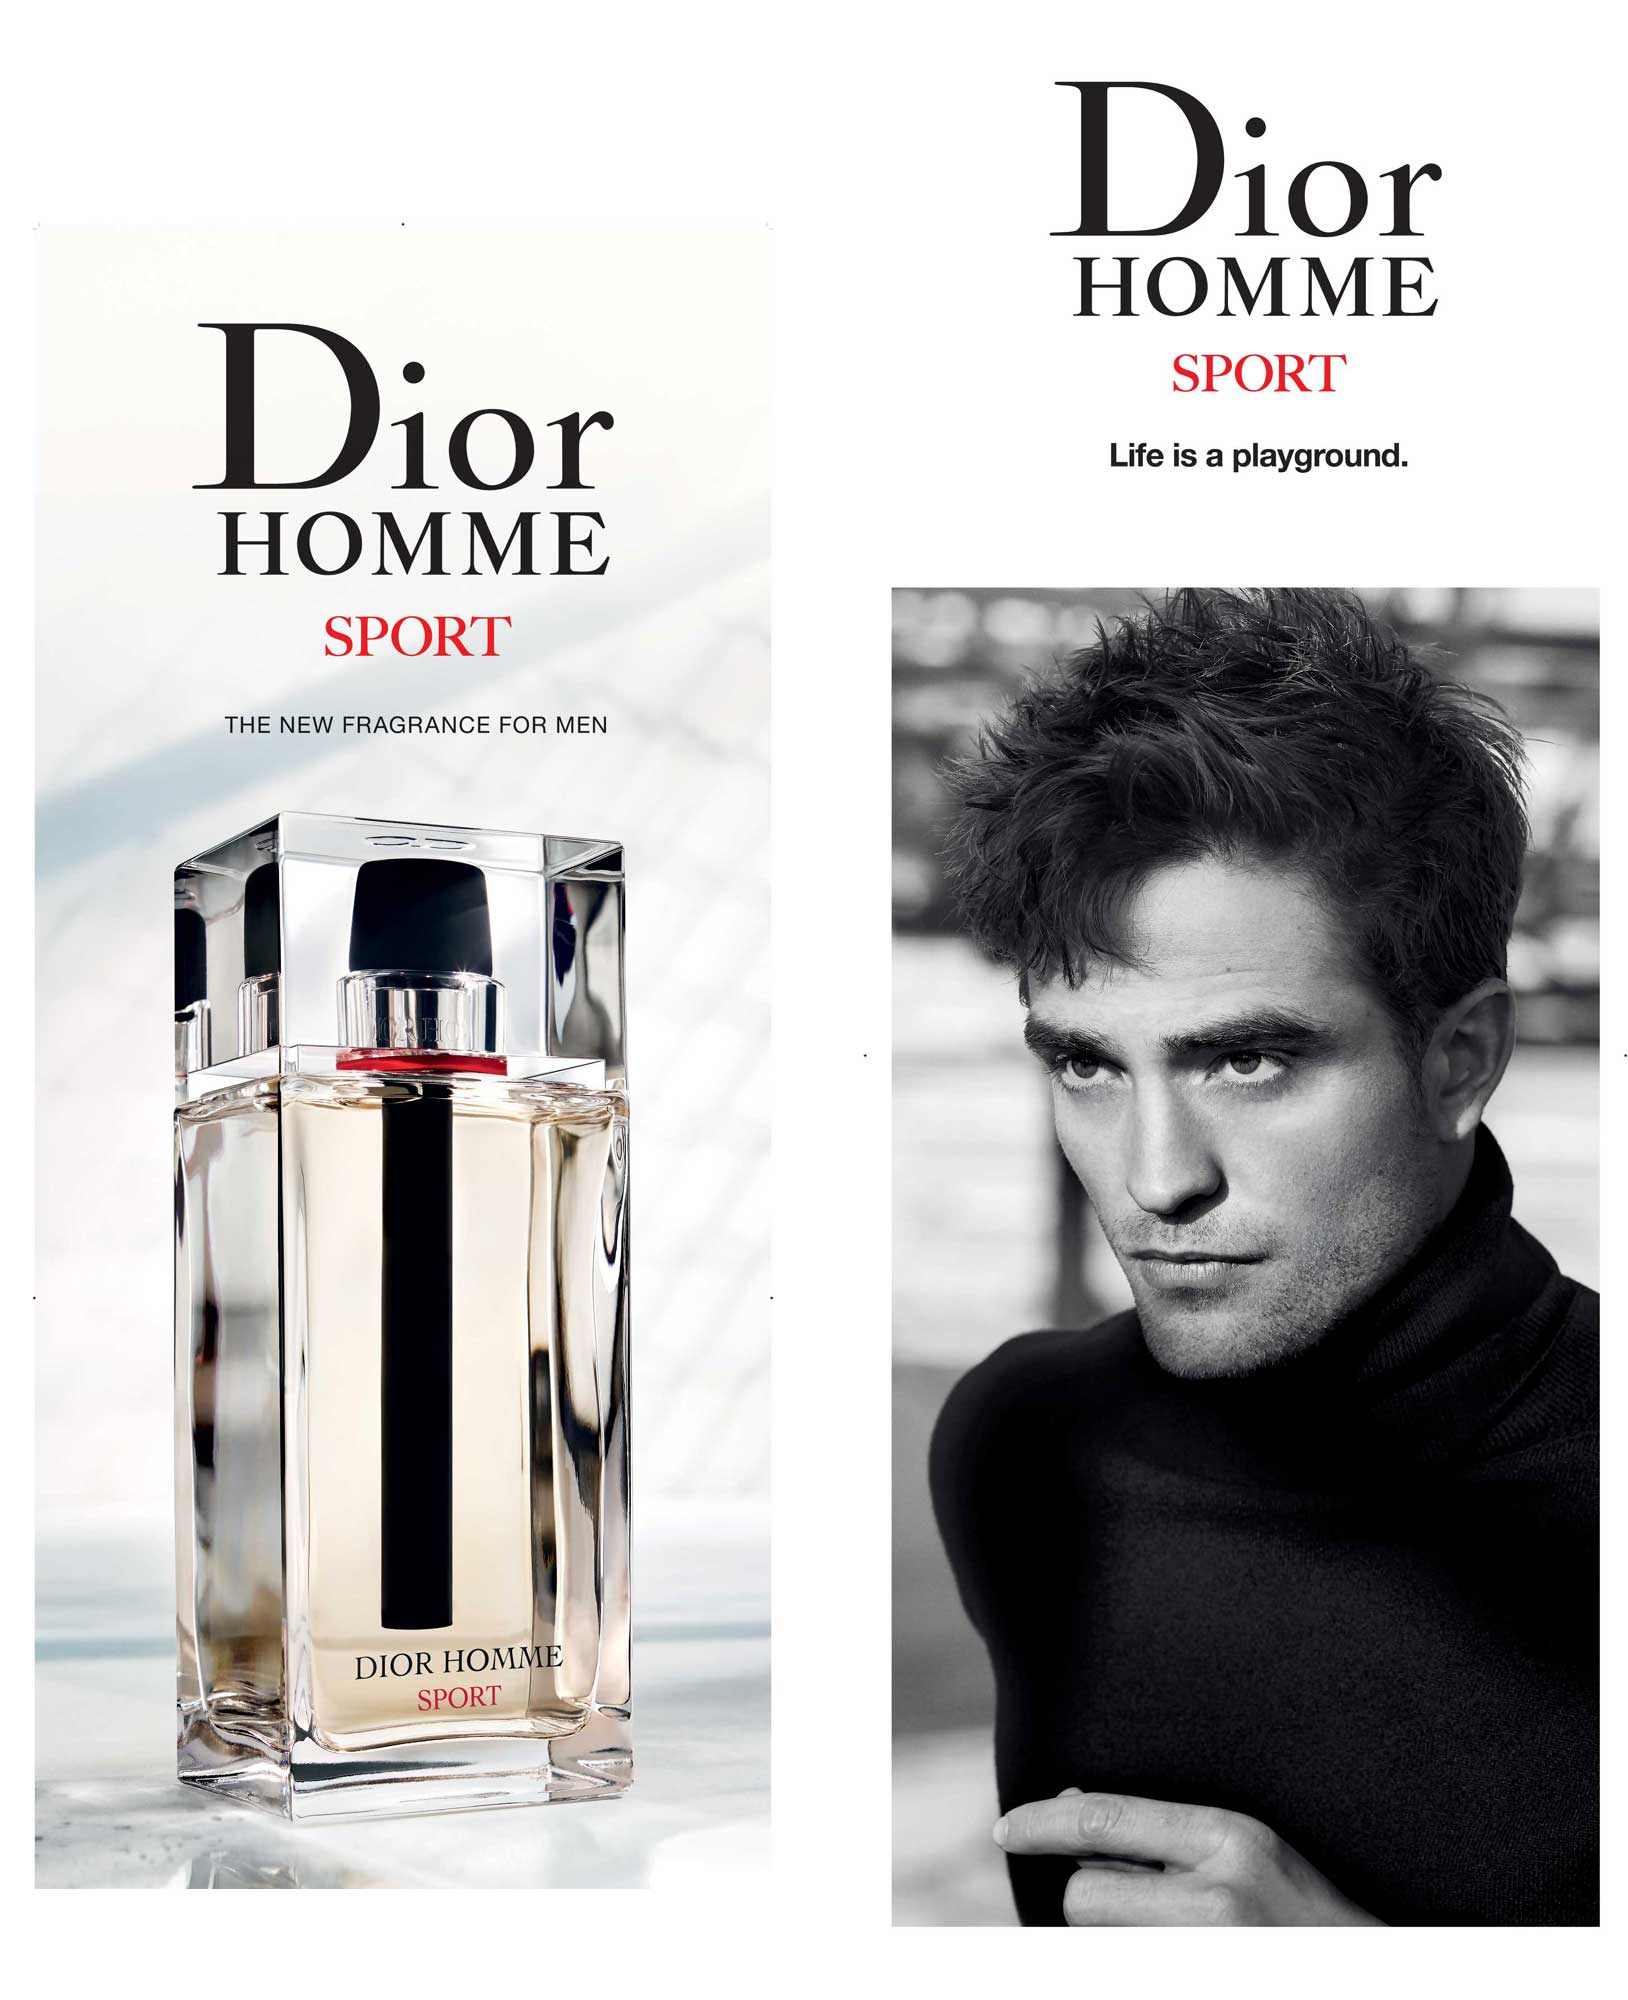 Dior Homme Sport 2017 Christian Dior cologne - a new fragrance for men 2017